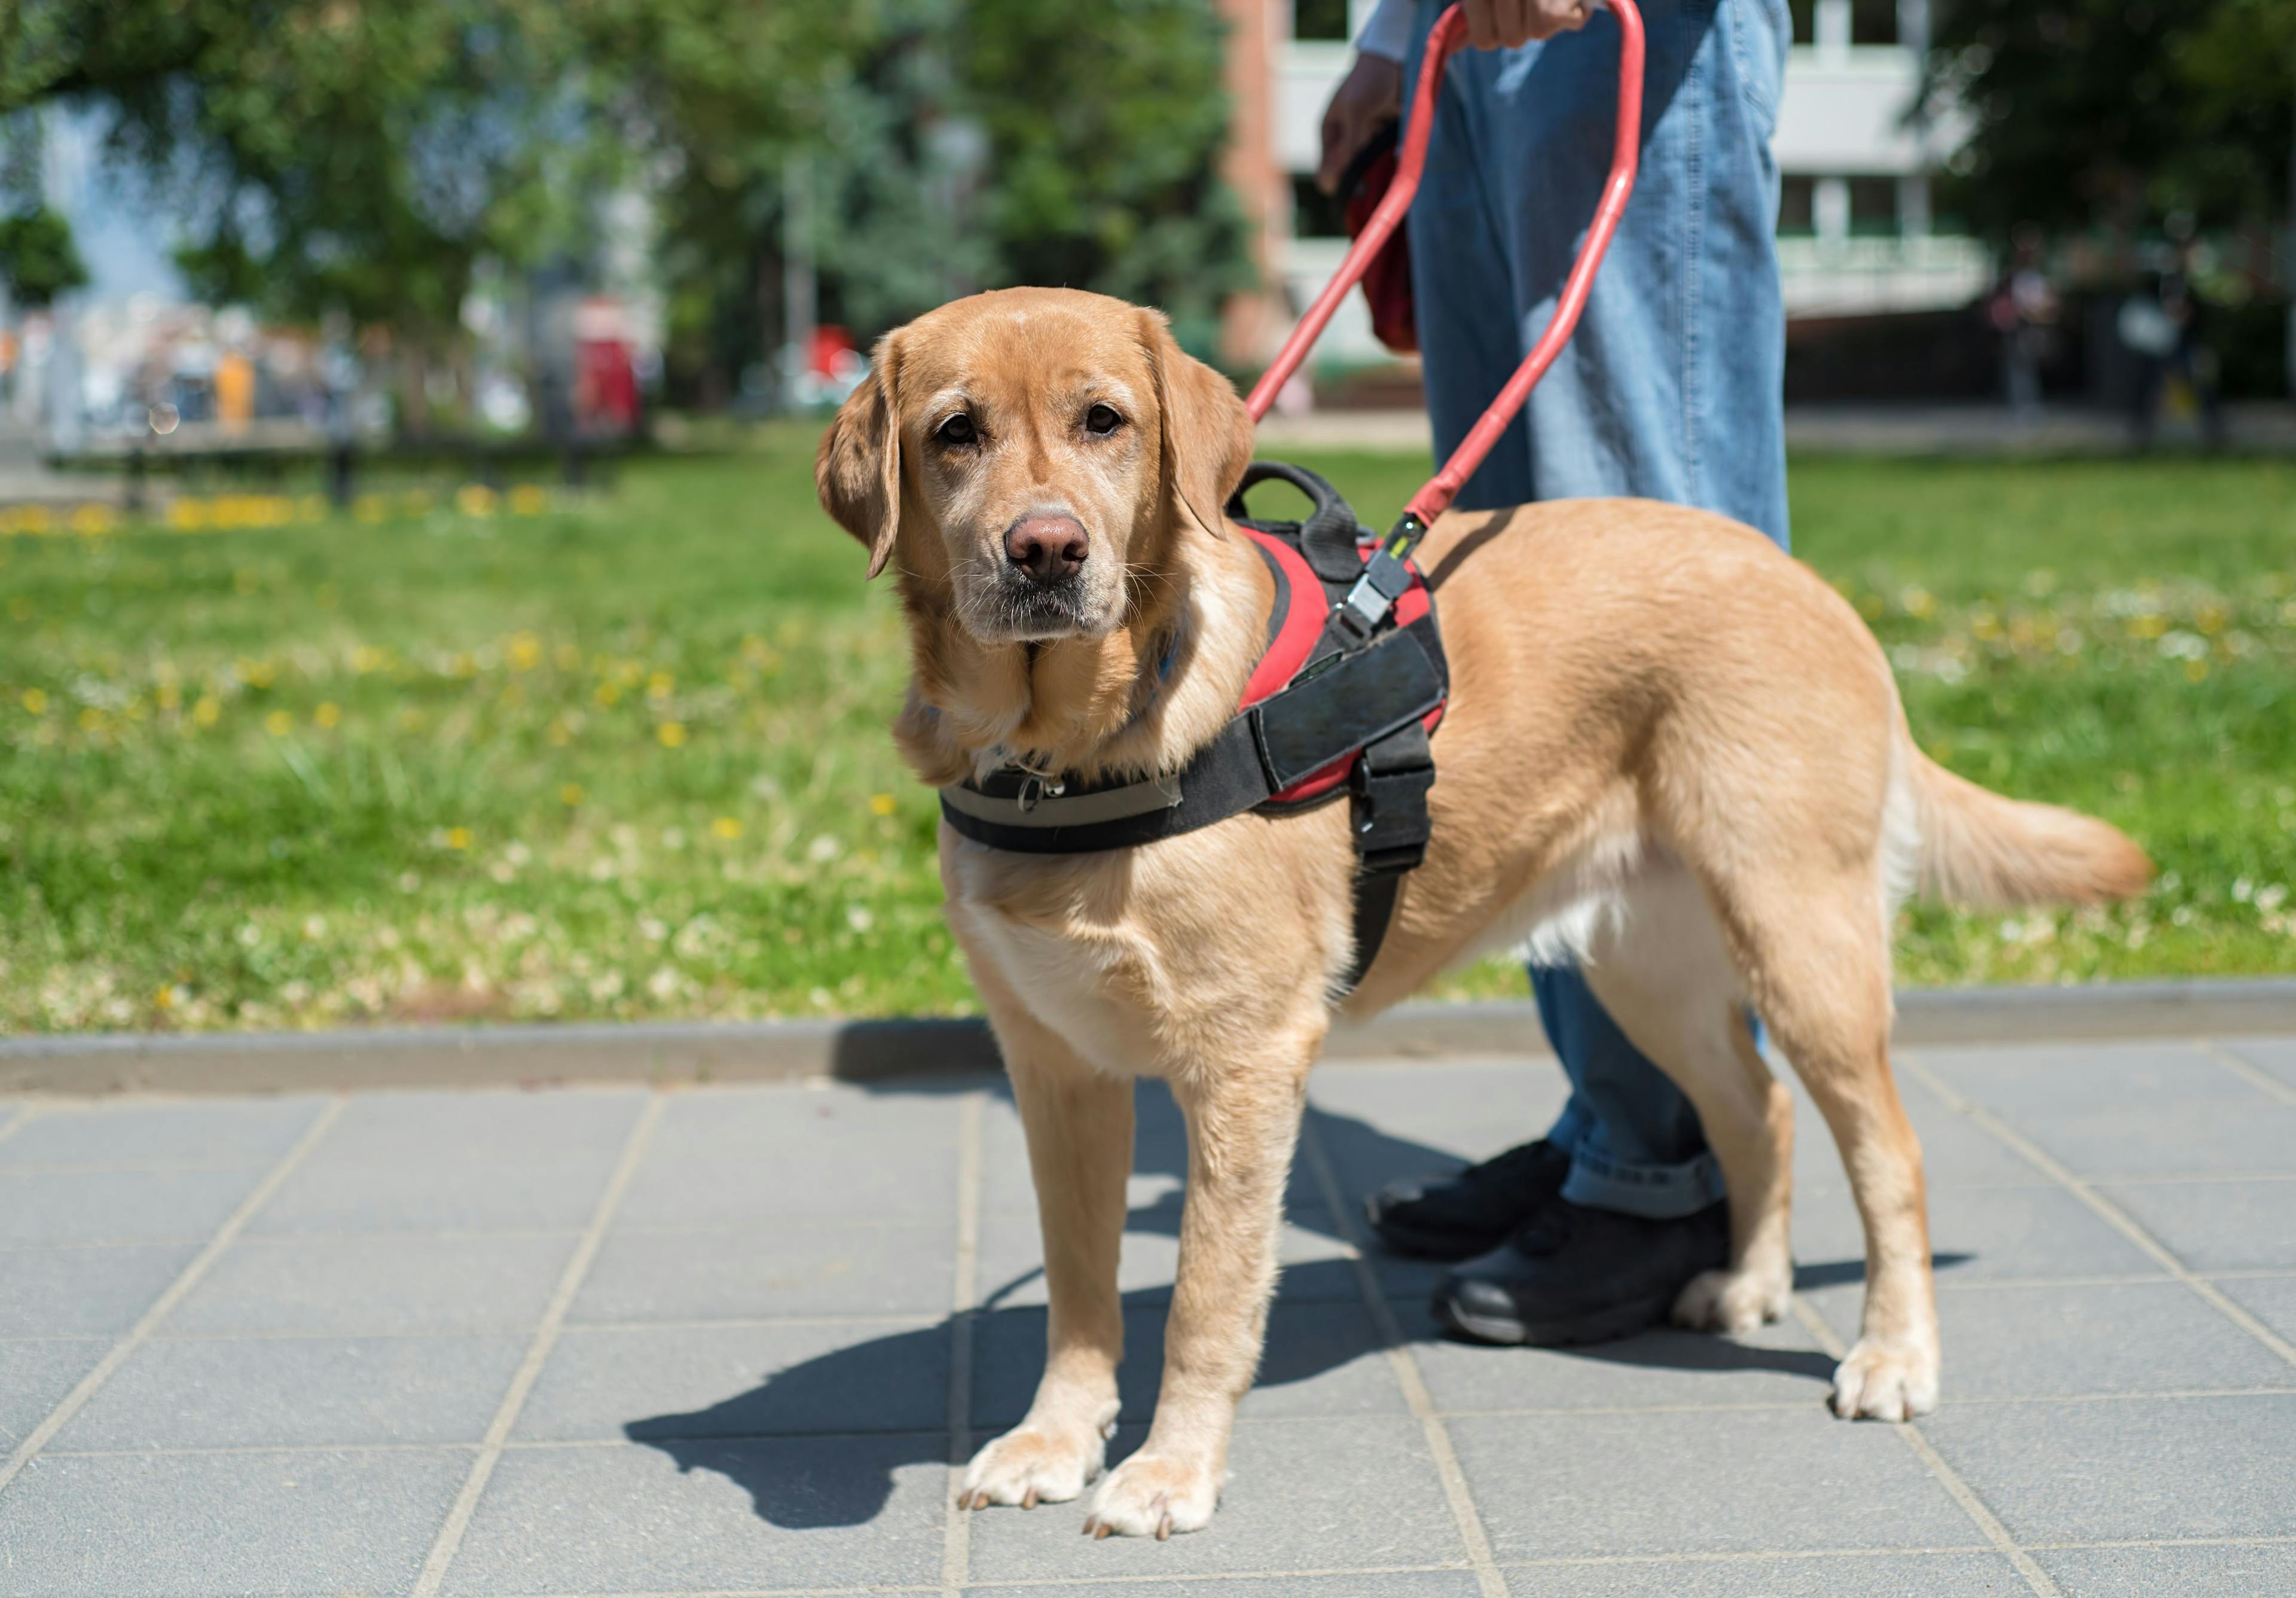 Eukanuba donates to Canine Companions' New Canine Health & Wellness Center